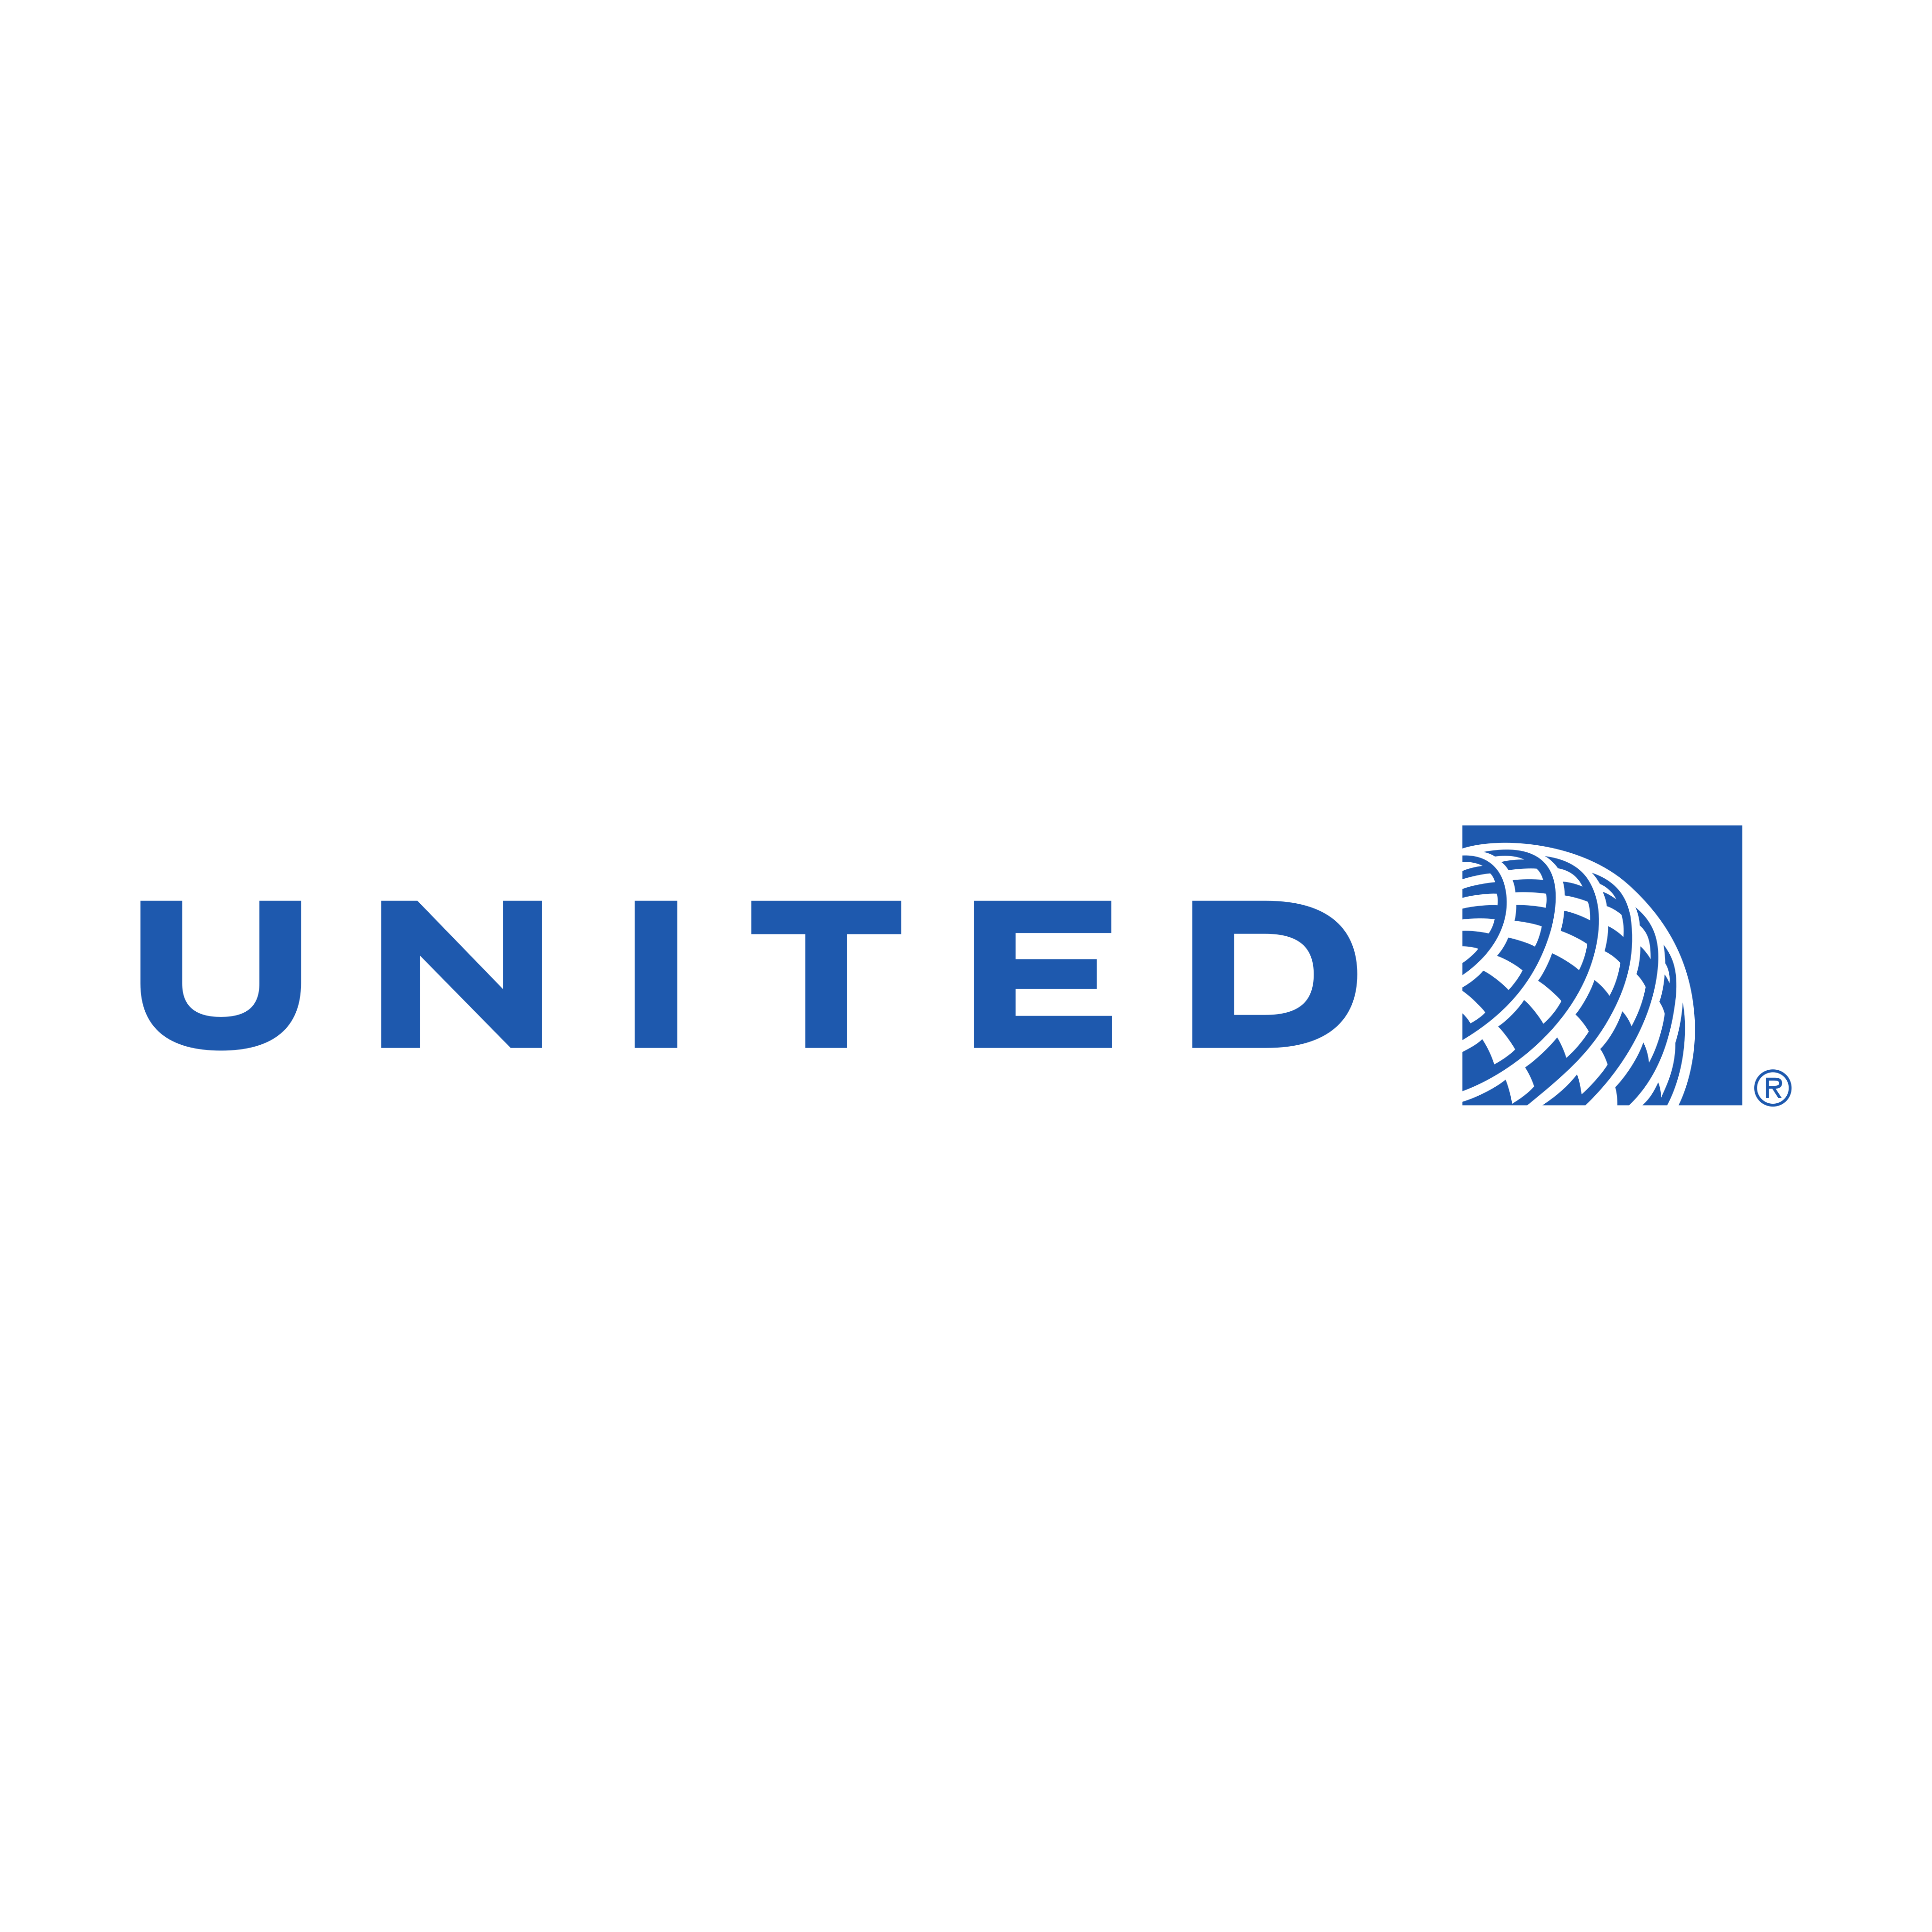 united logo 0 - United Airlines Logo